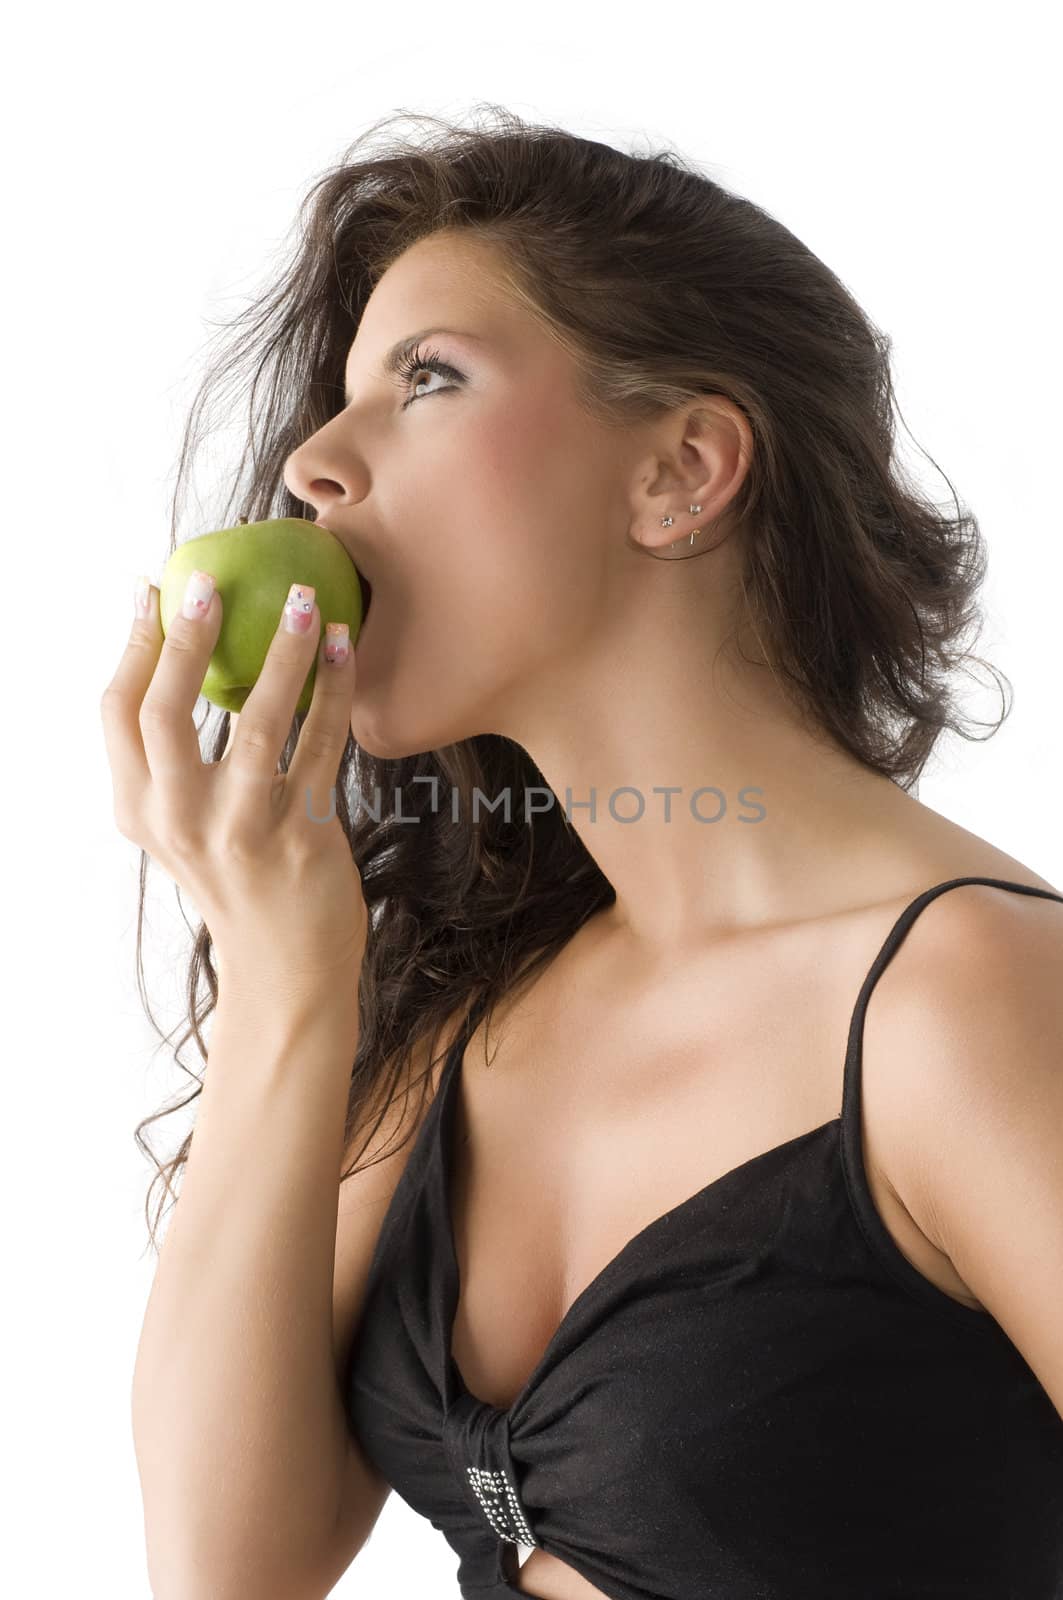 biting apple by fotoCD